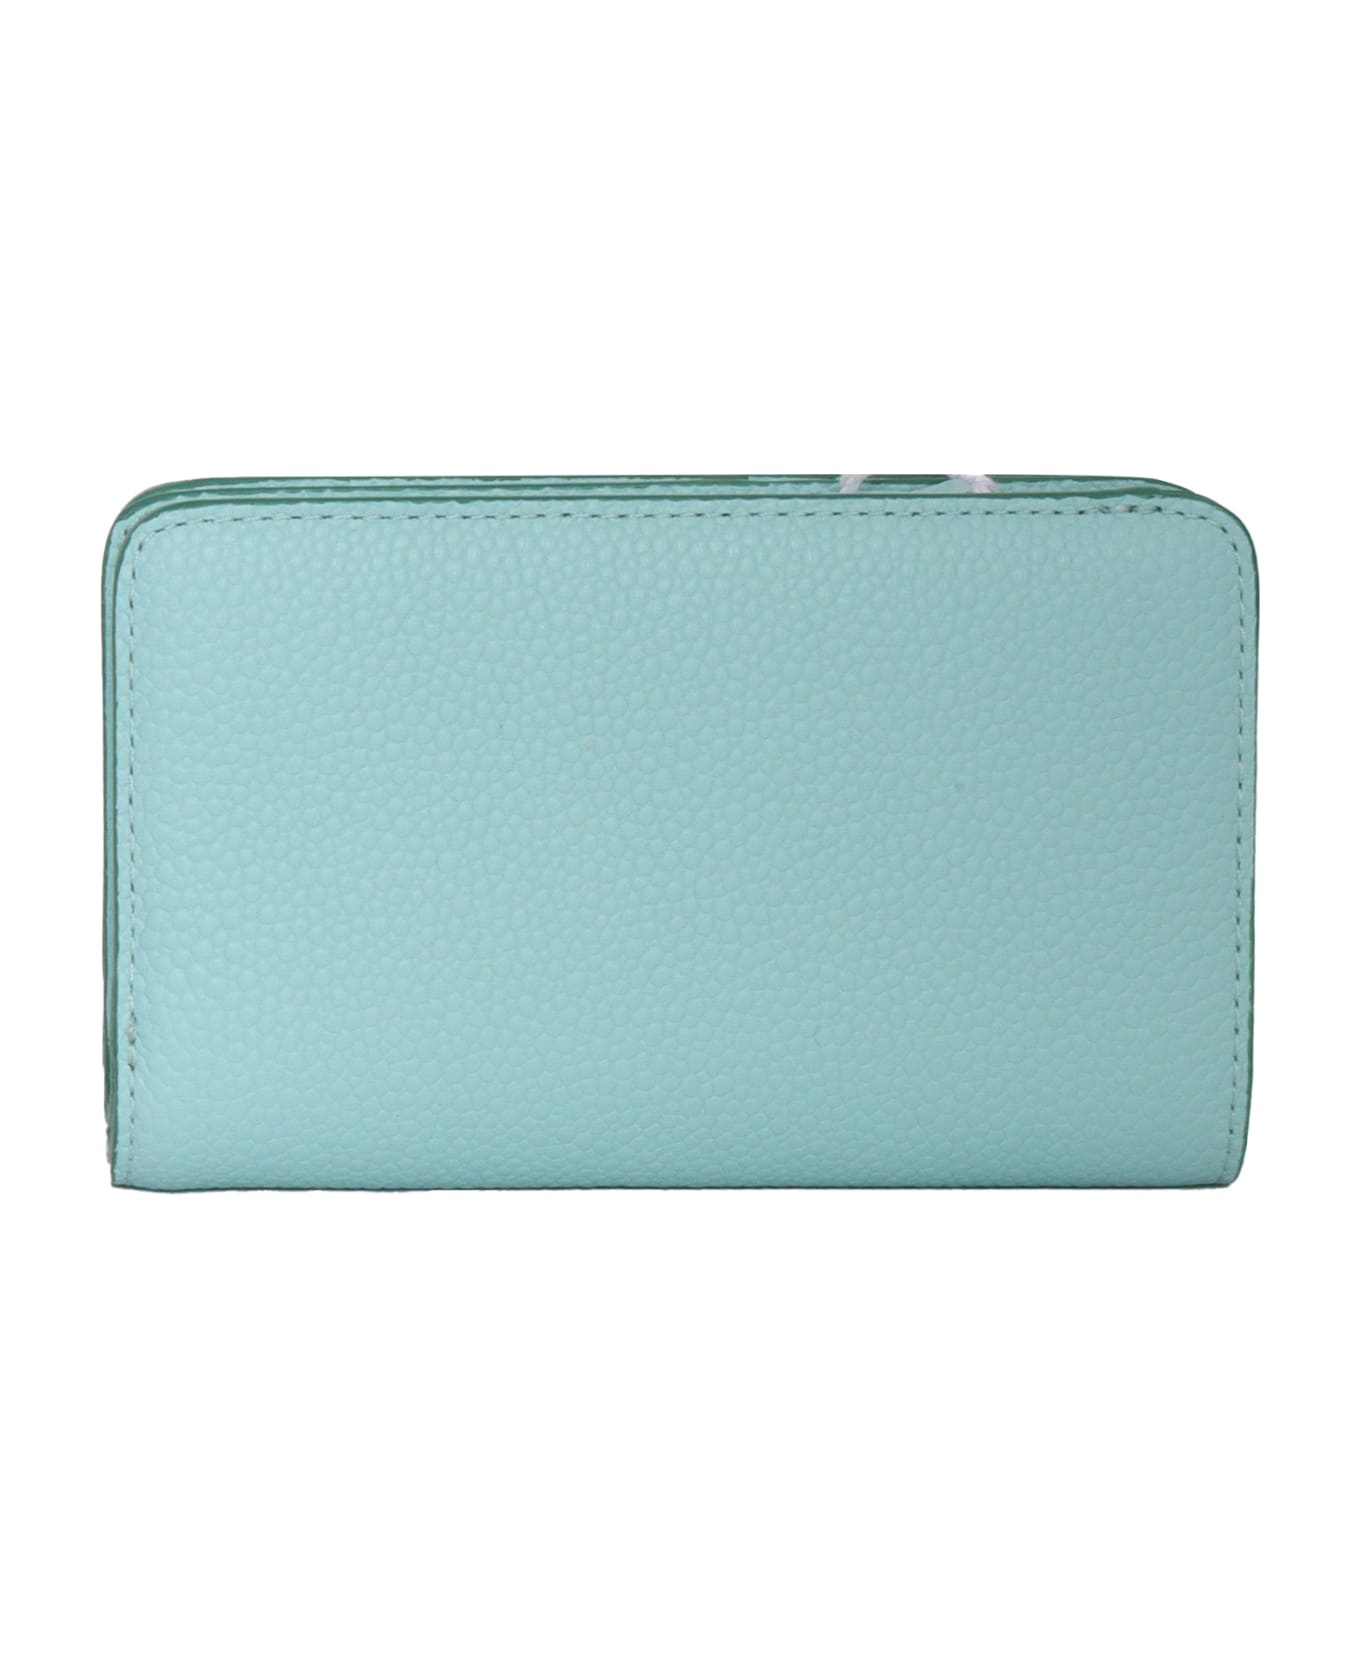 Lancel Light Blue Leather Wallet - GREEN 財布